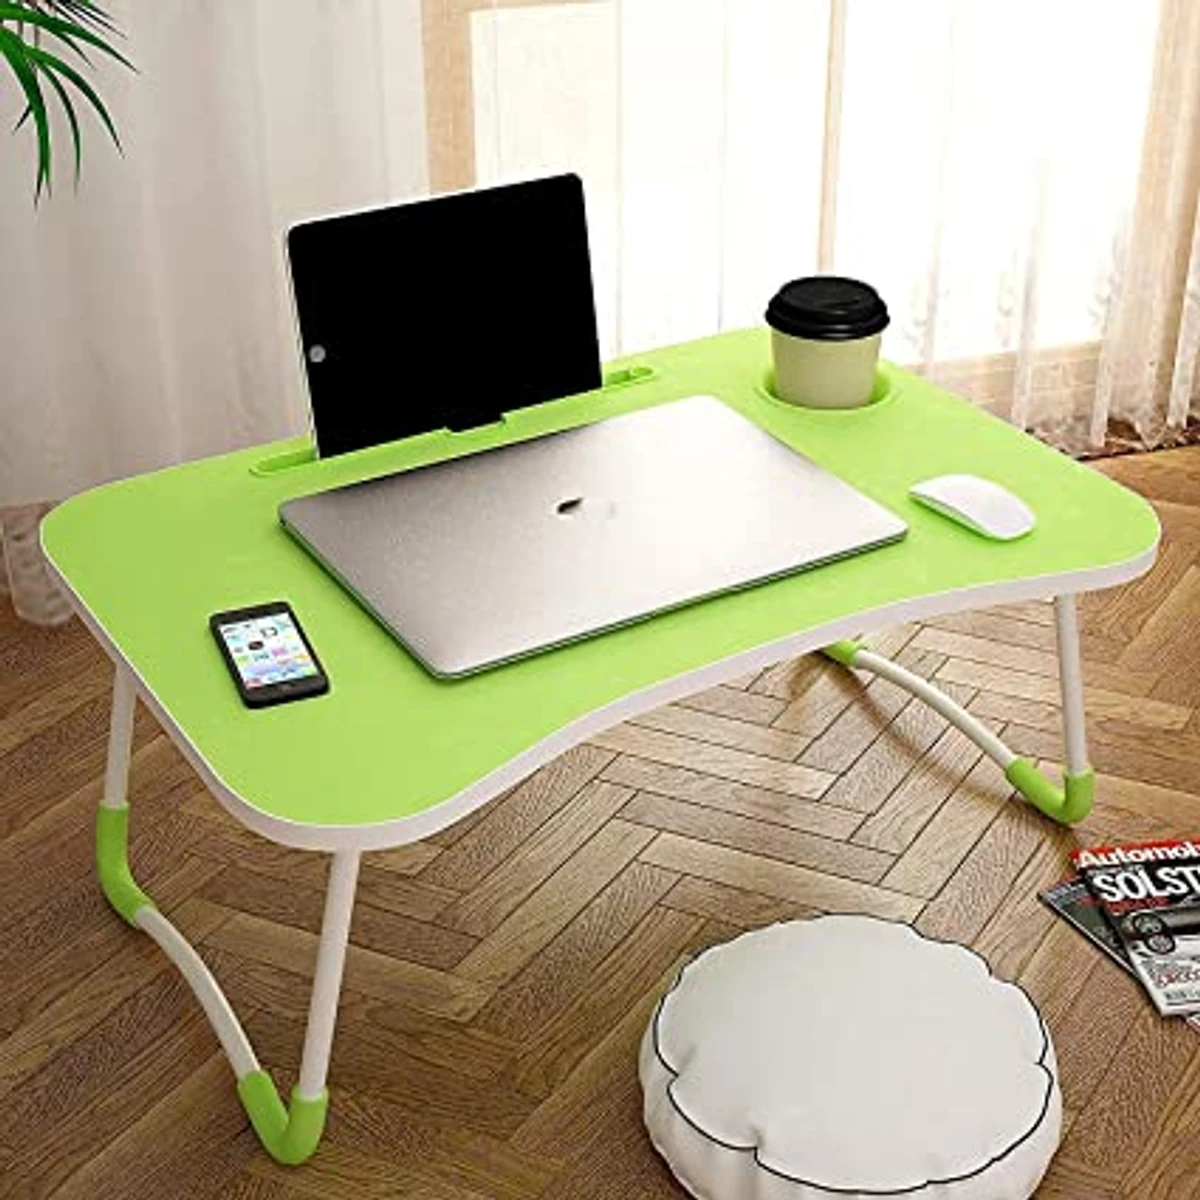 Foldable study table